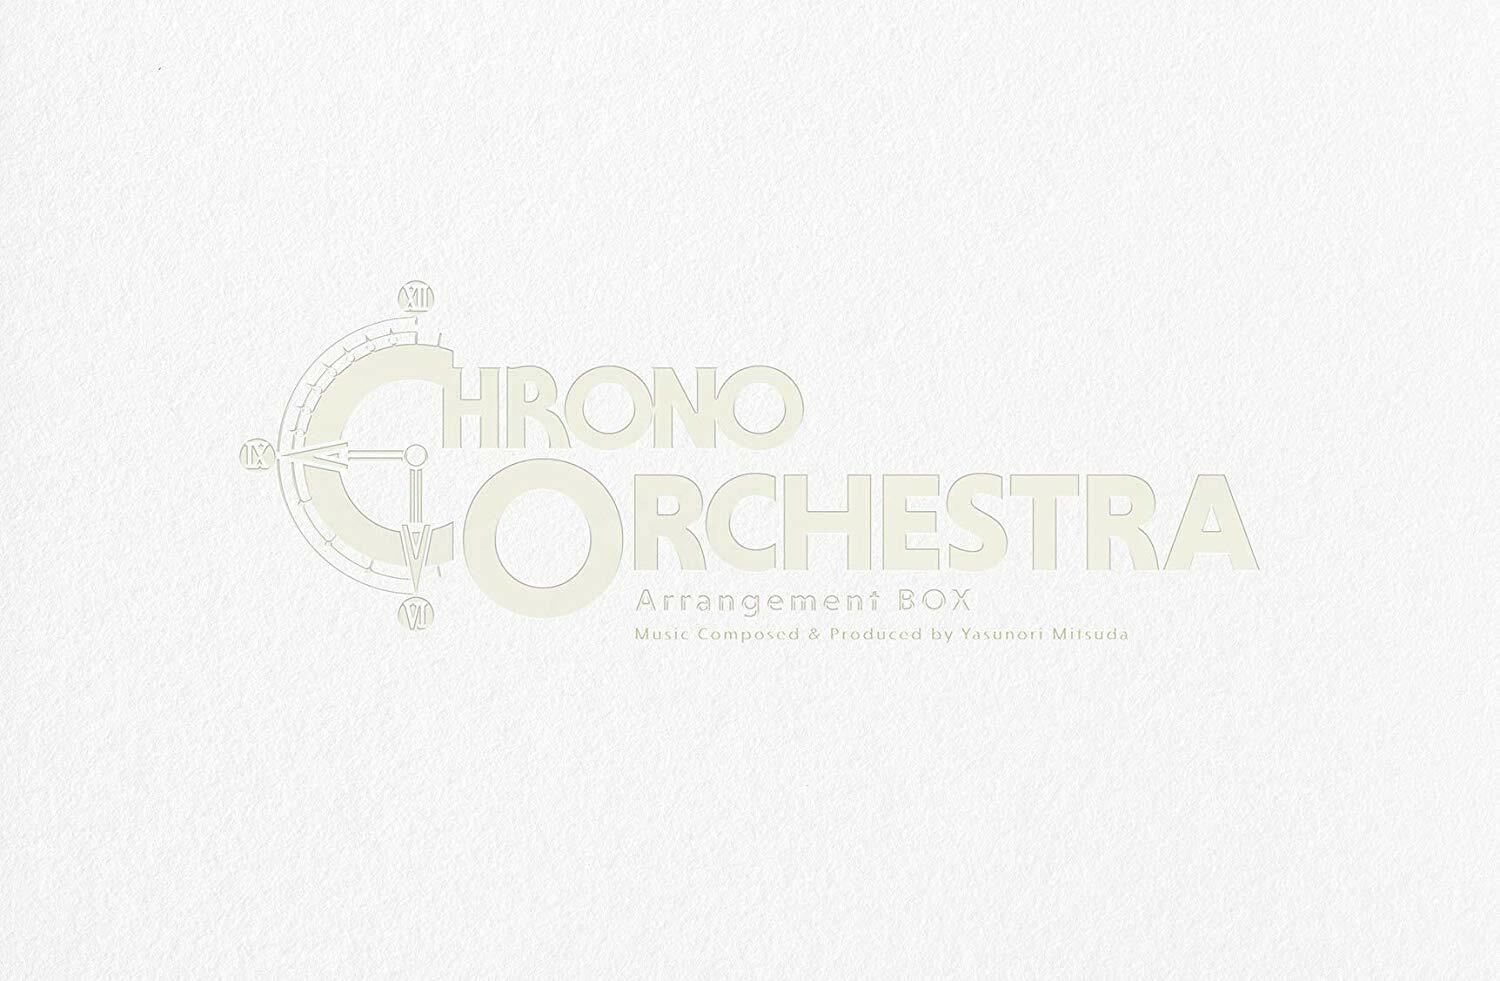 CHRONO Orchestral Arrangement BOX (完全生産限定盤) (特典なし) 限定版